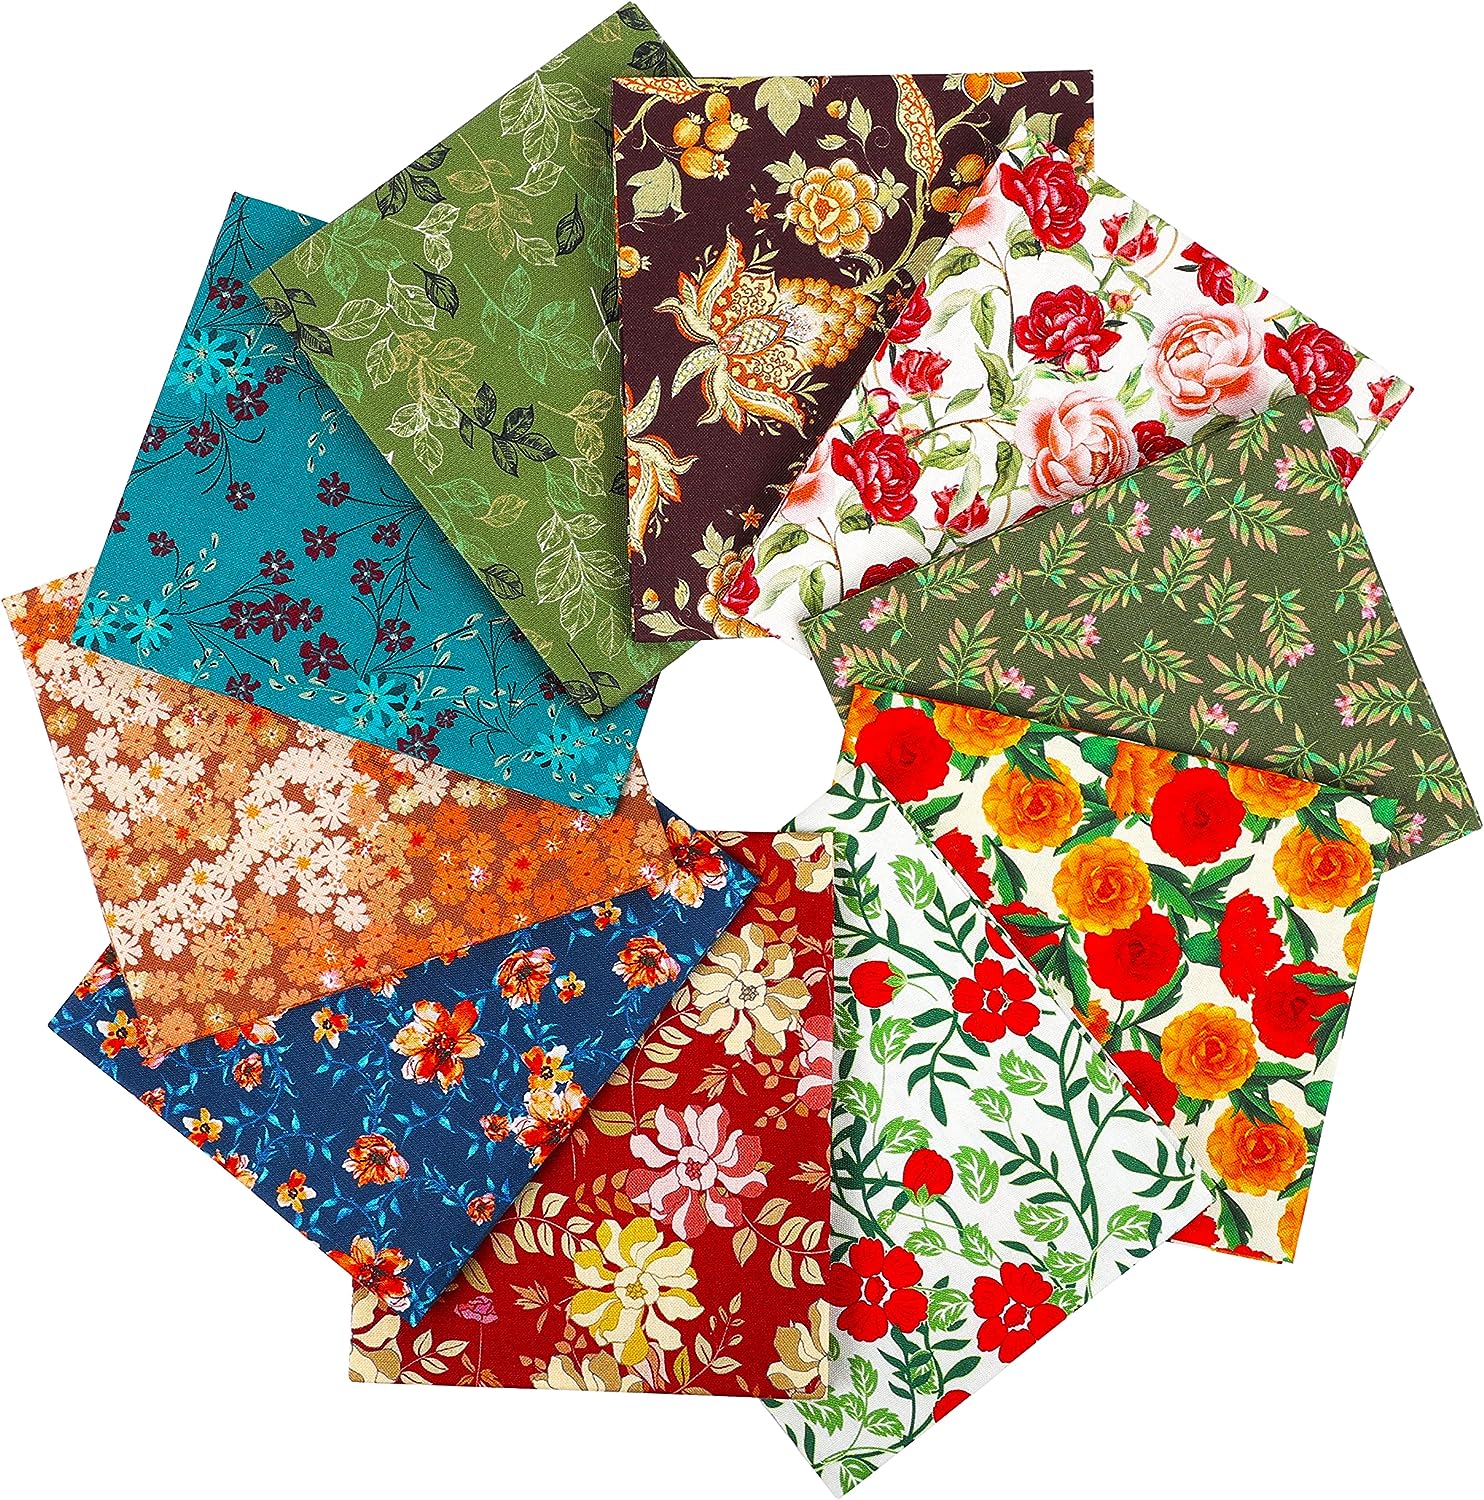 Qimicody Quilting Fabric, 44pcs 100% Cotton 9.8” x 9.8”(25cm x 25cm) Fat Quarters Fabric Bundles, Pre-Cut Squares Sheets for Patchwork Sewing